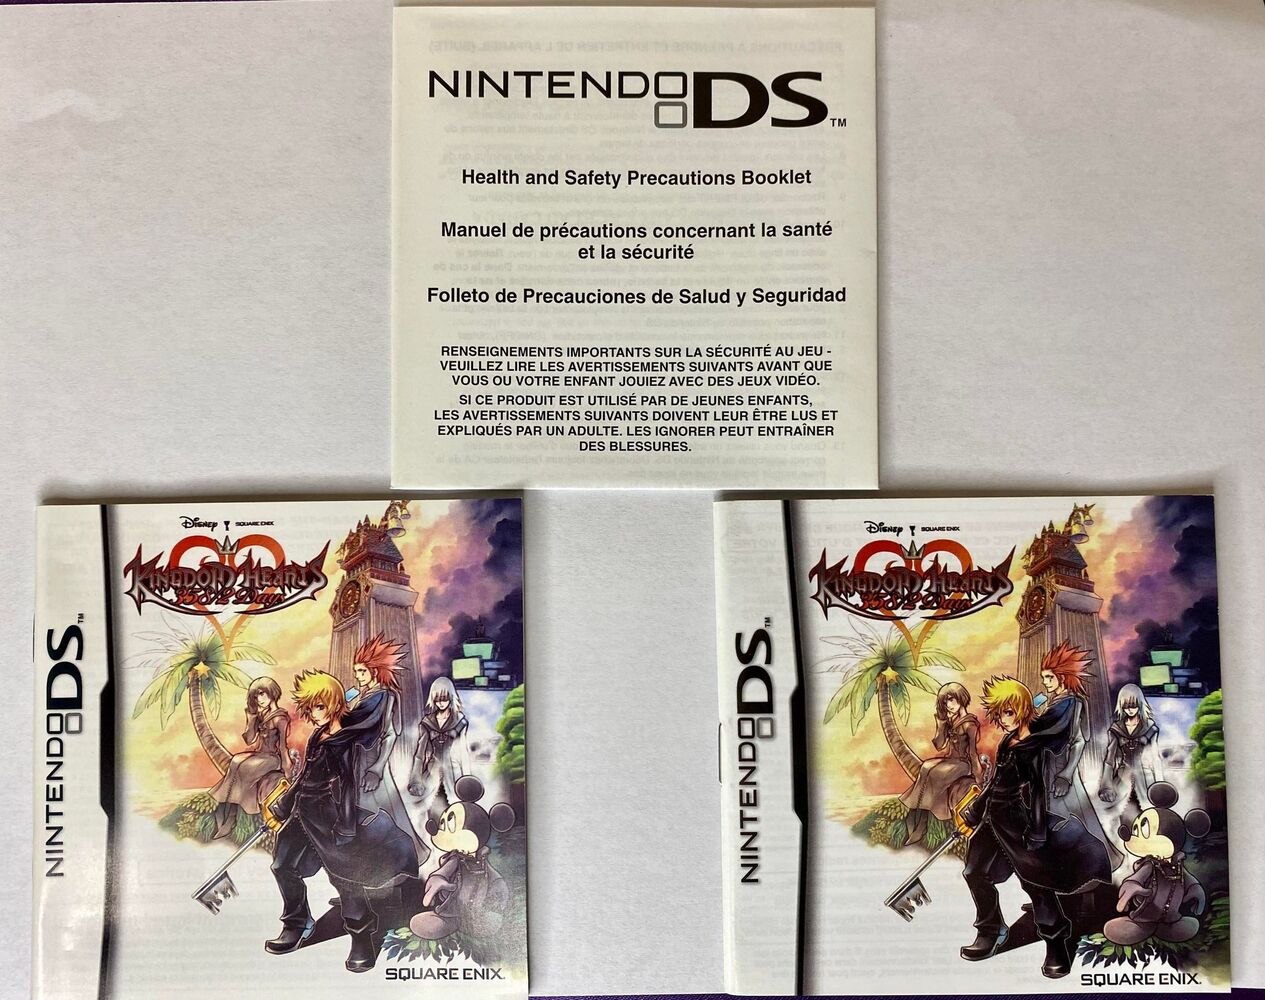 Kingdom Hearts: 358/2 Days (Nintendo DS)